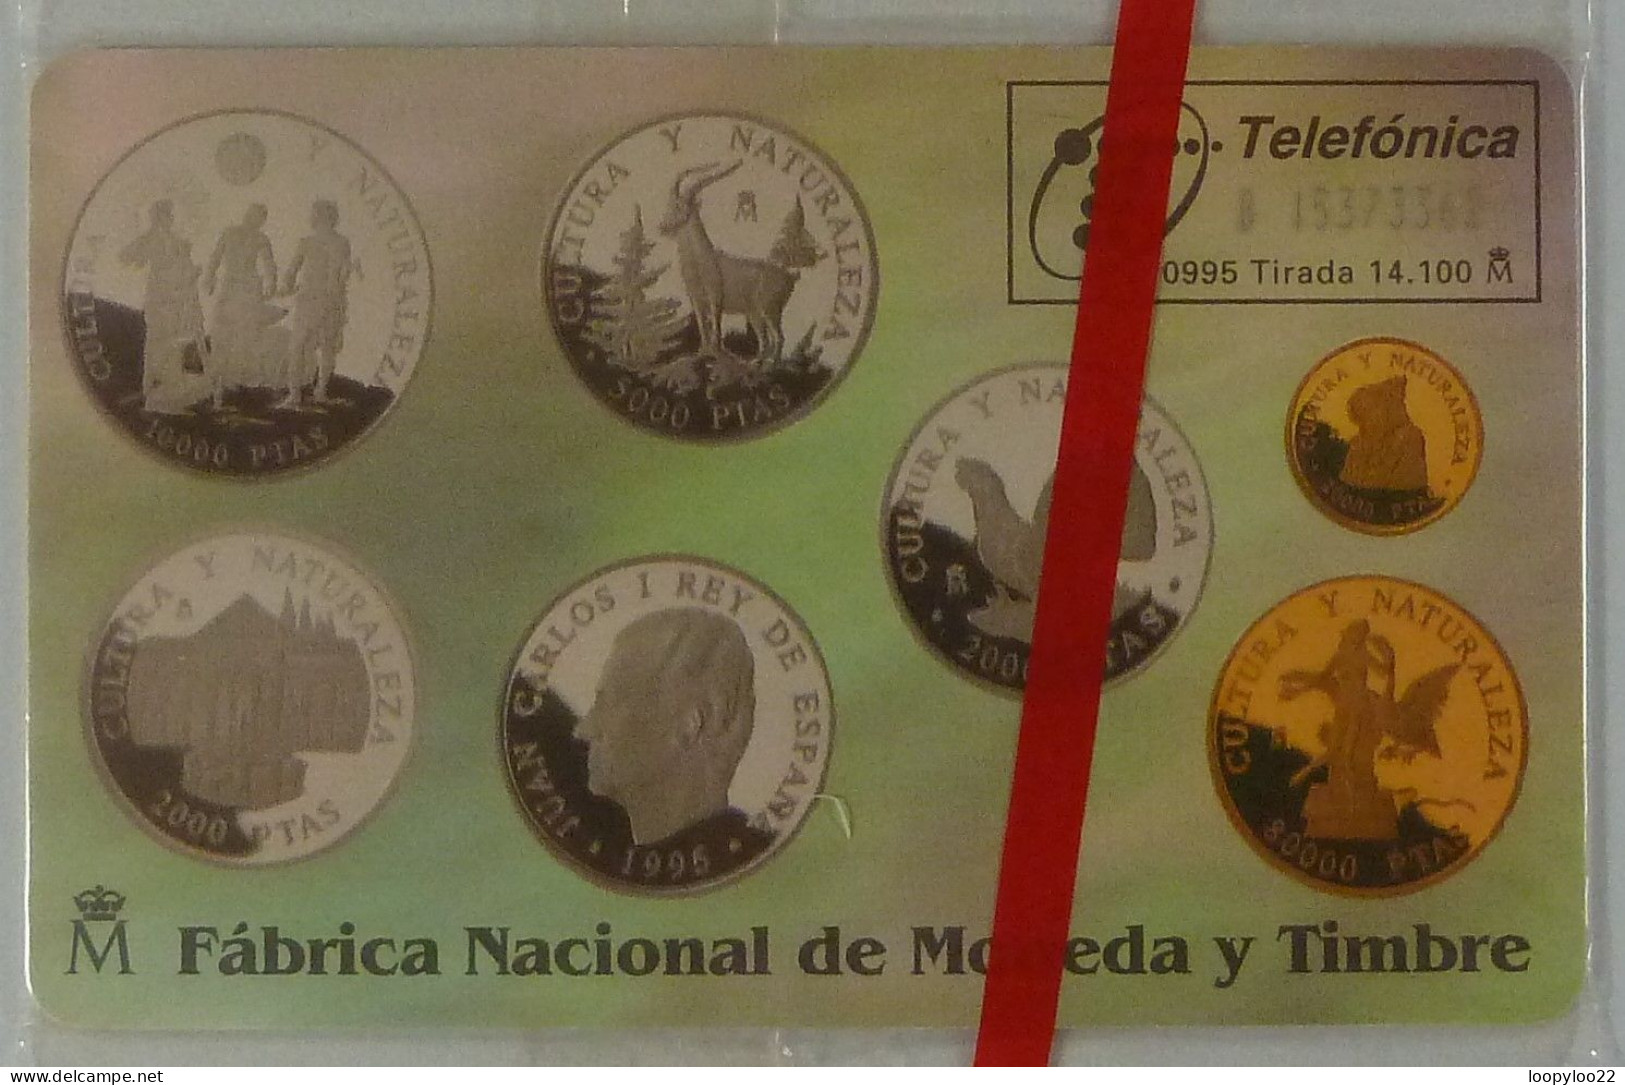 SPAIN - Chip - 100 Units - P-151 - Monedas Conmemoratives II - 09/95 - 14100ex - Mint Blister - Emissioni Private